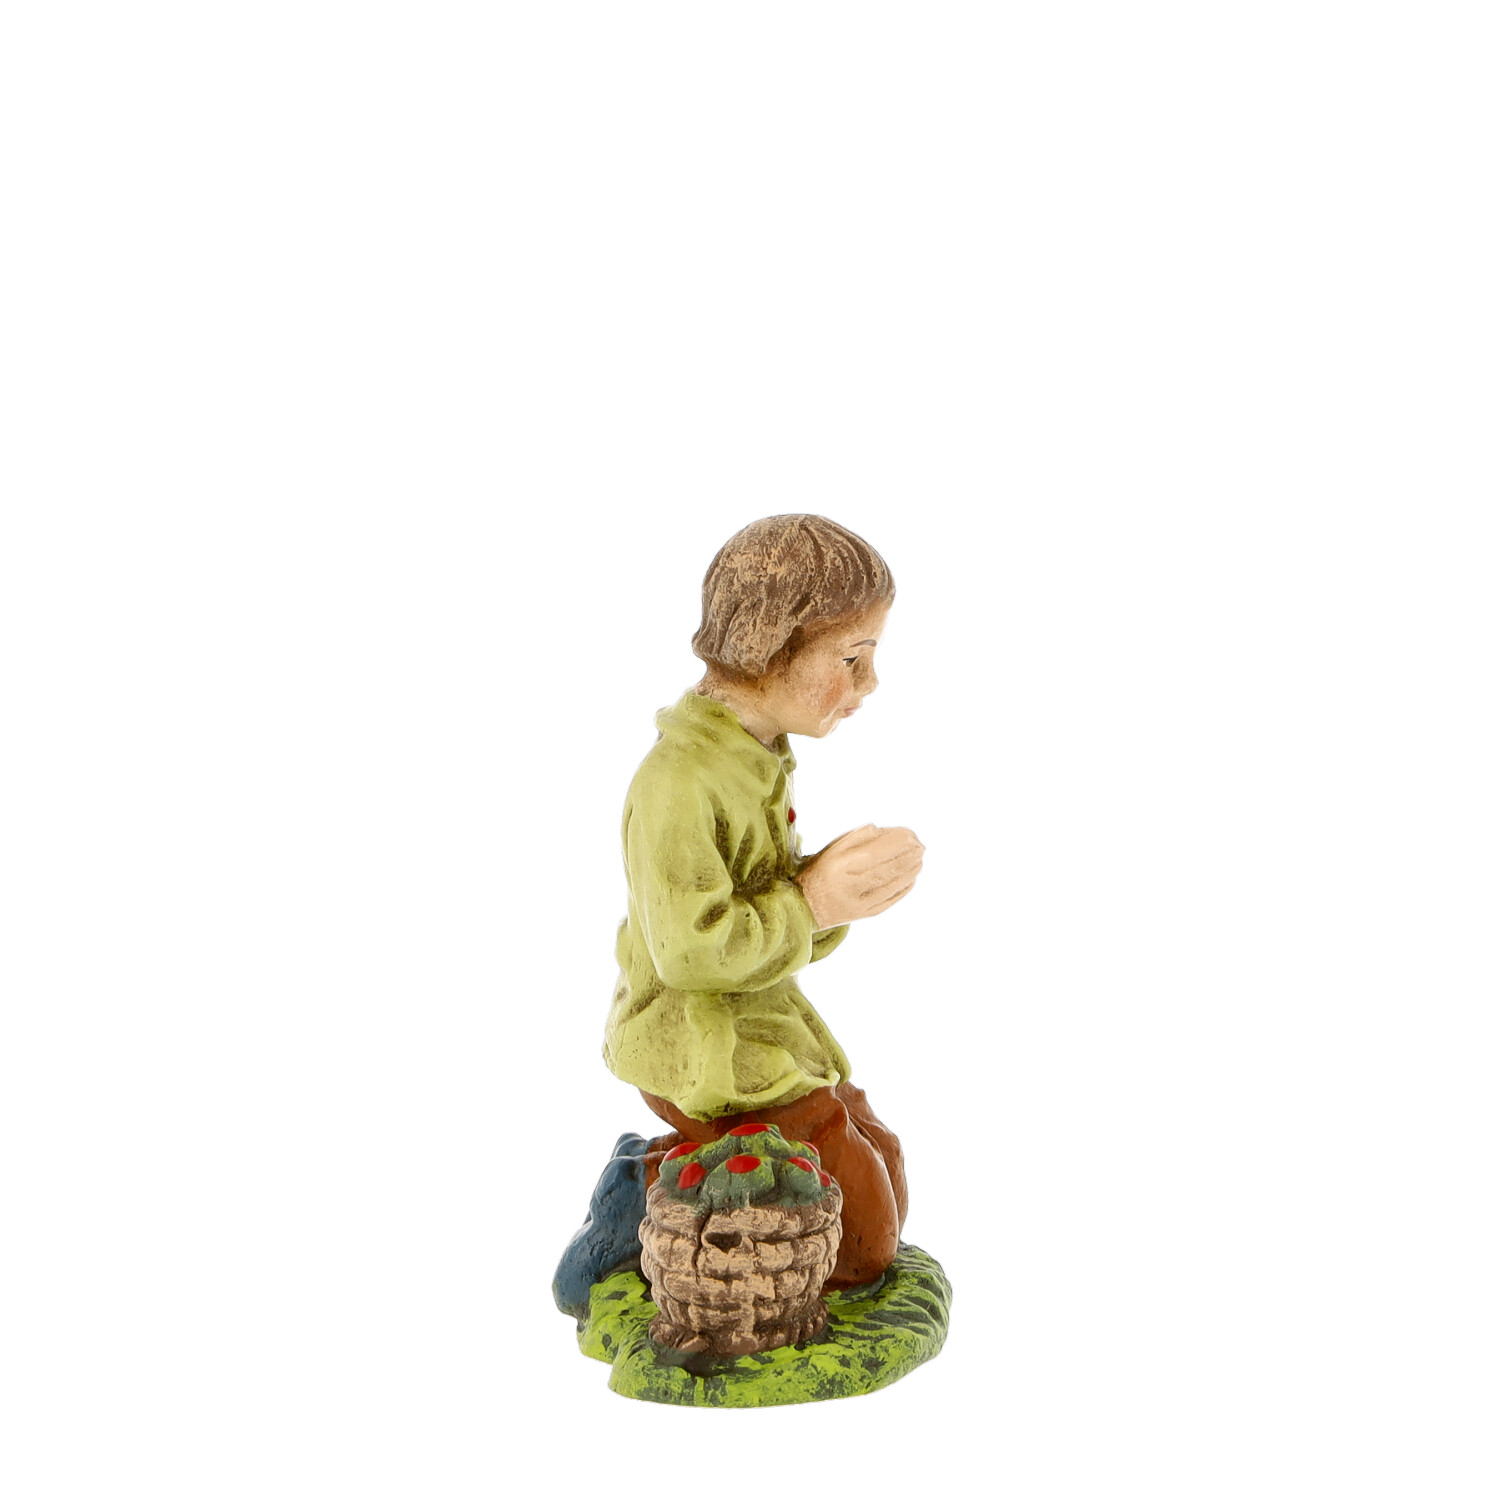 Praying shepherd boy, to 6.75 in. figures - Marolin Nativity figure - made in Germany